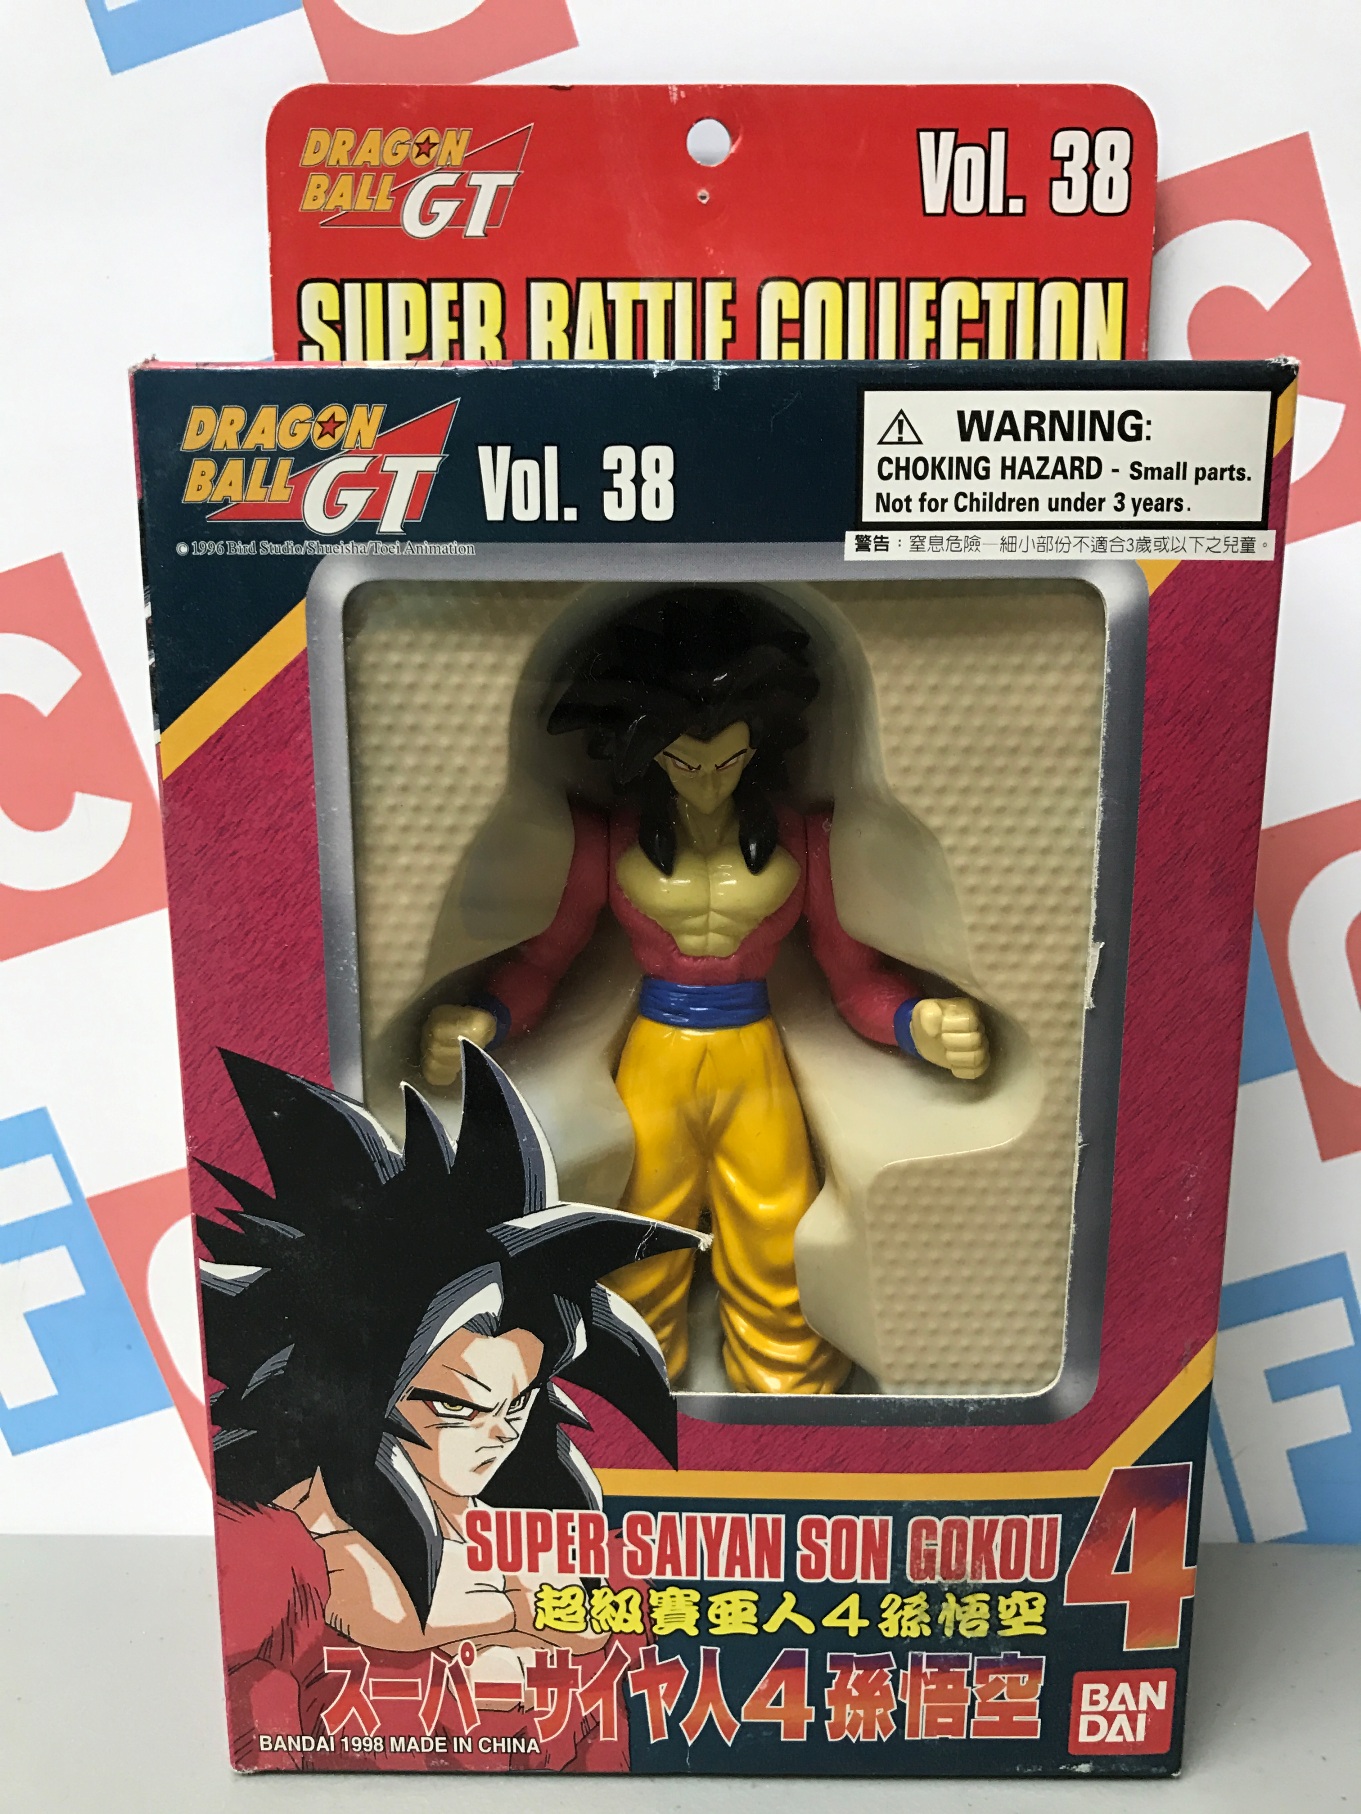 Dragon Ball GT Super Battle Collection Vol. 32 Super Saiyan 3 Son Goku  Figure